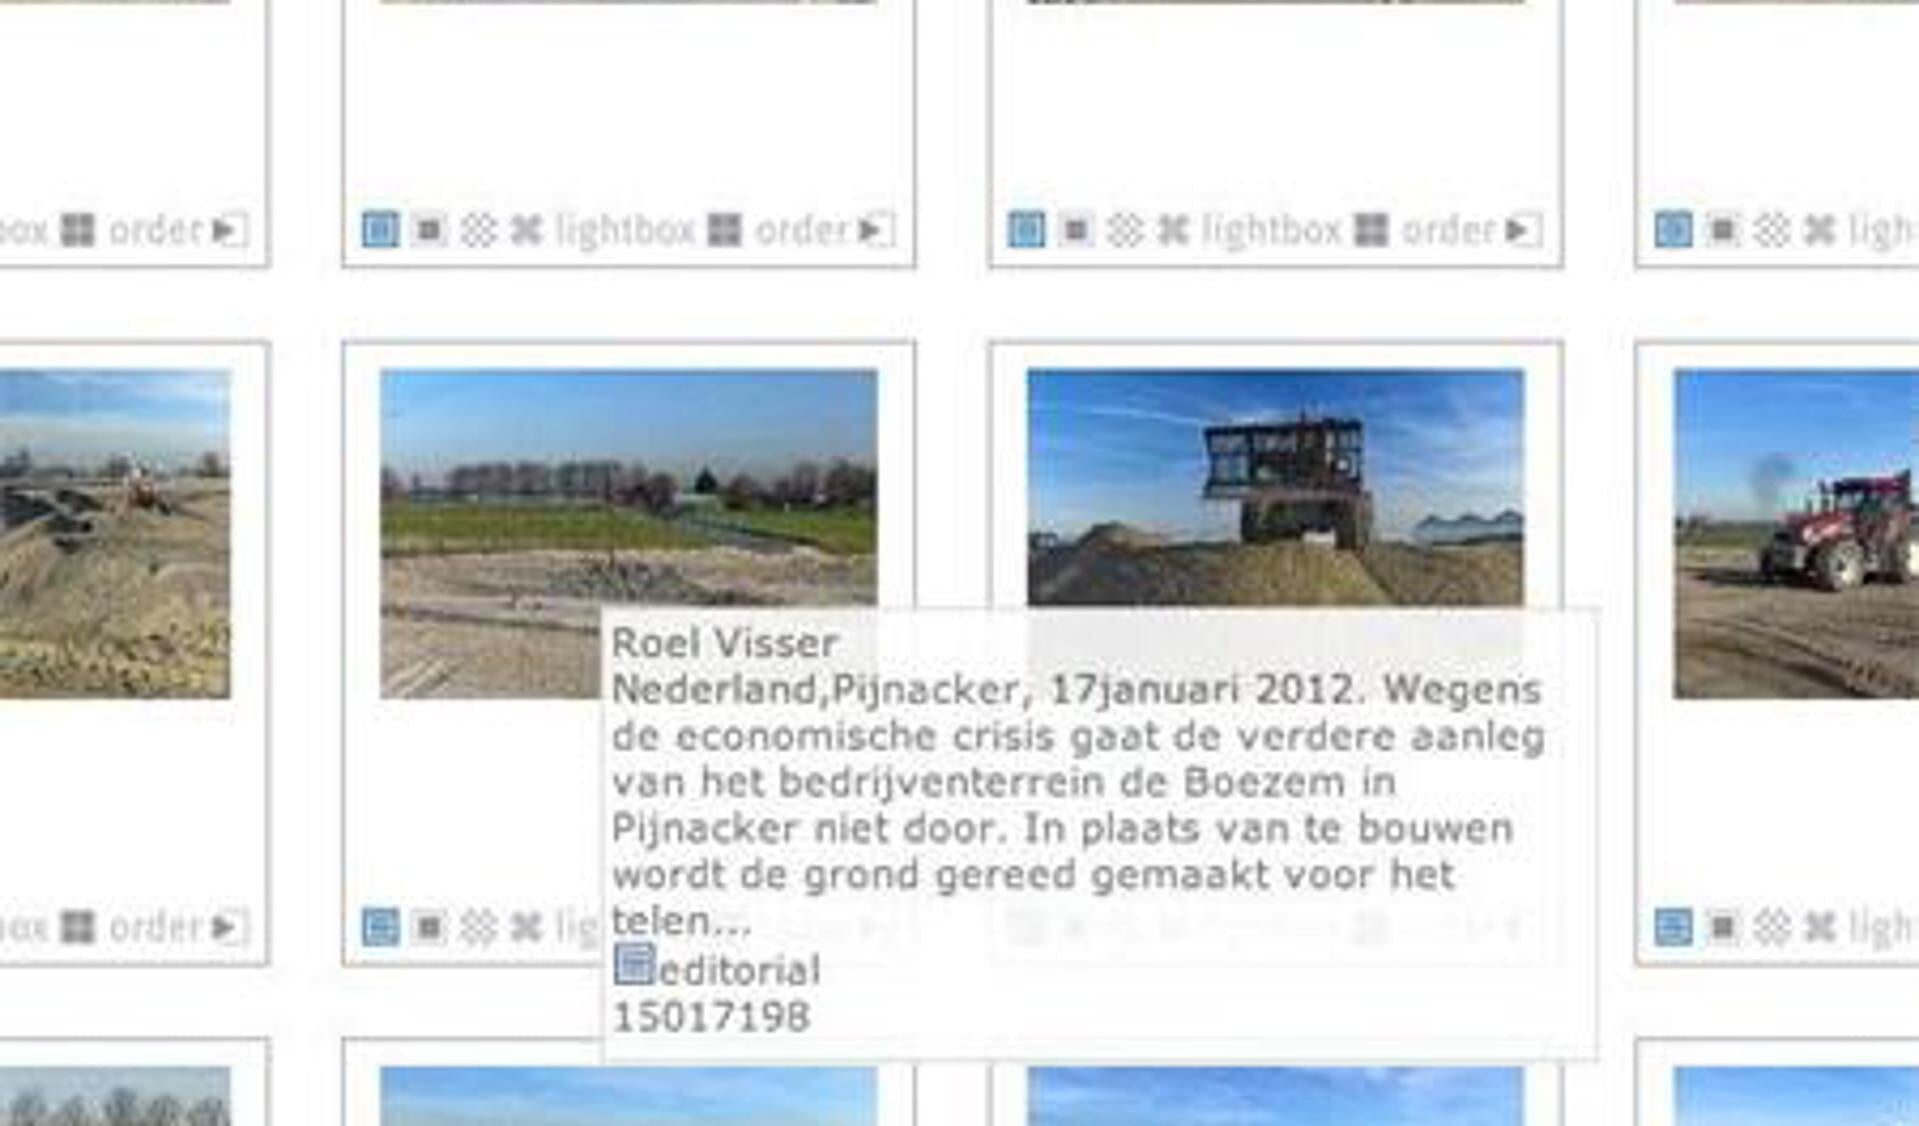 Dit bericht stond op hollandsehoogte.nl, maar bleek een misverstand.